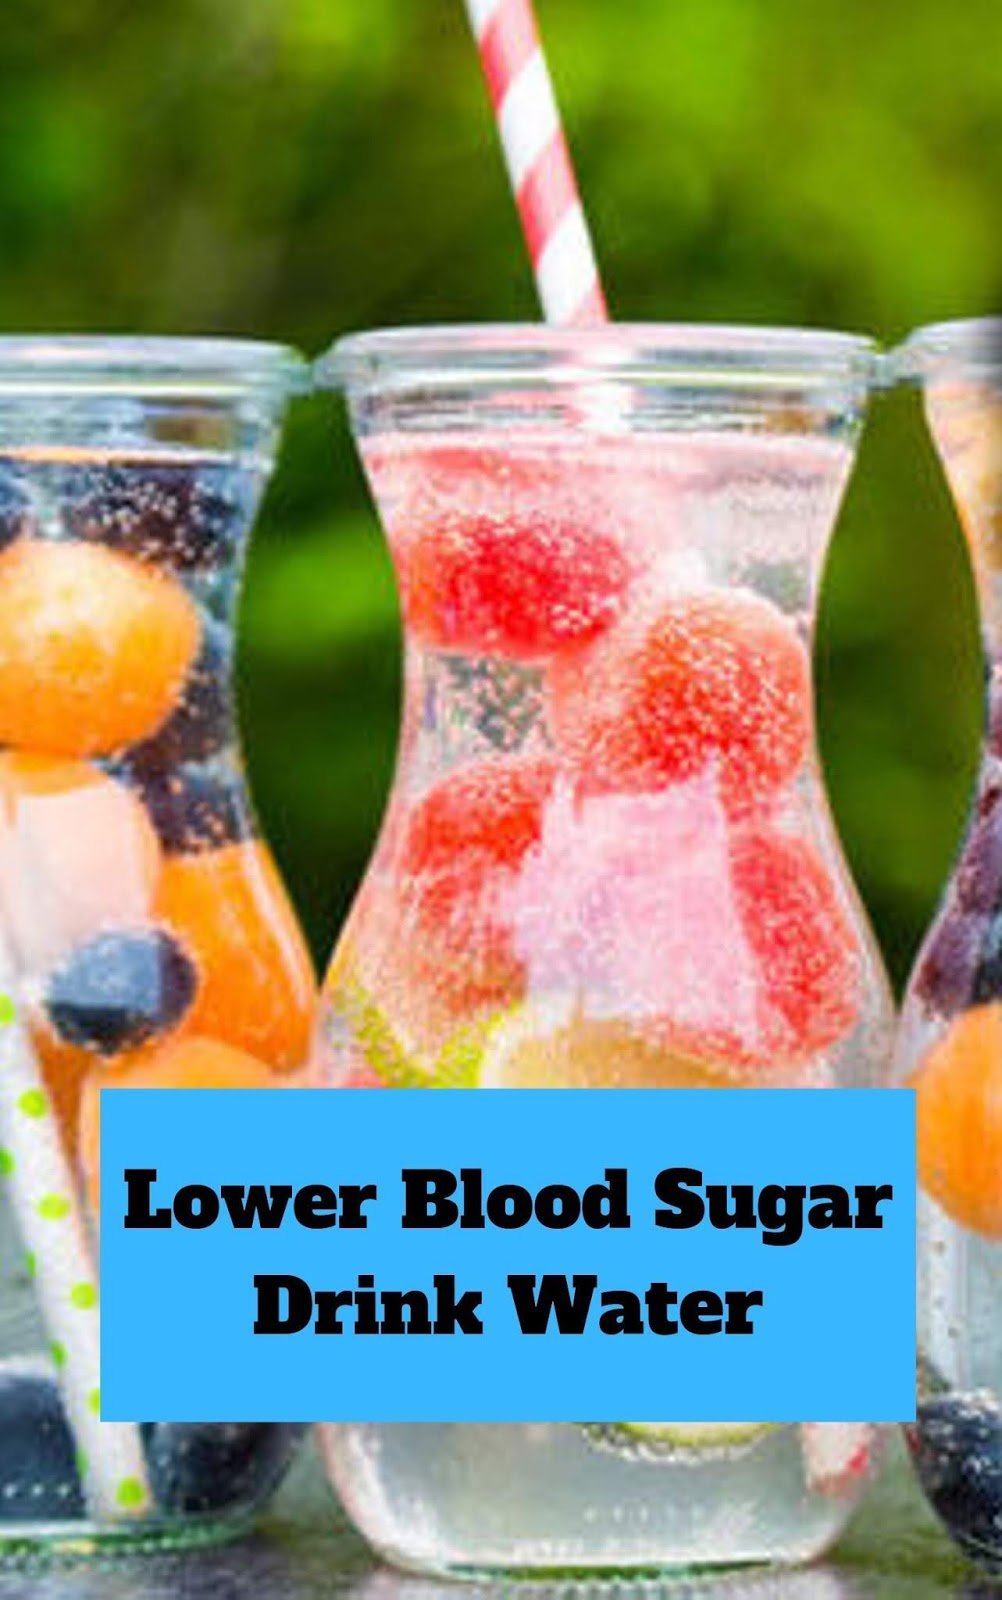 Blood Sugar Symptoms: Lower blood sugar drink water